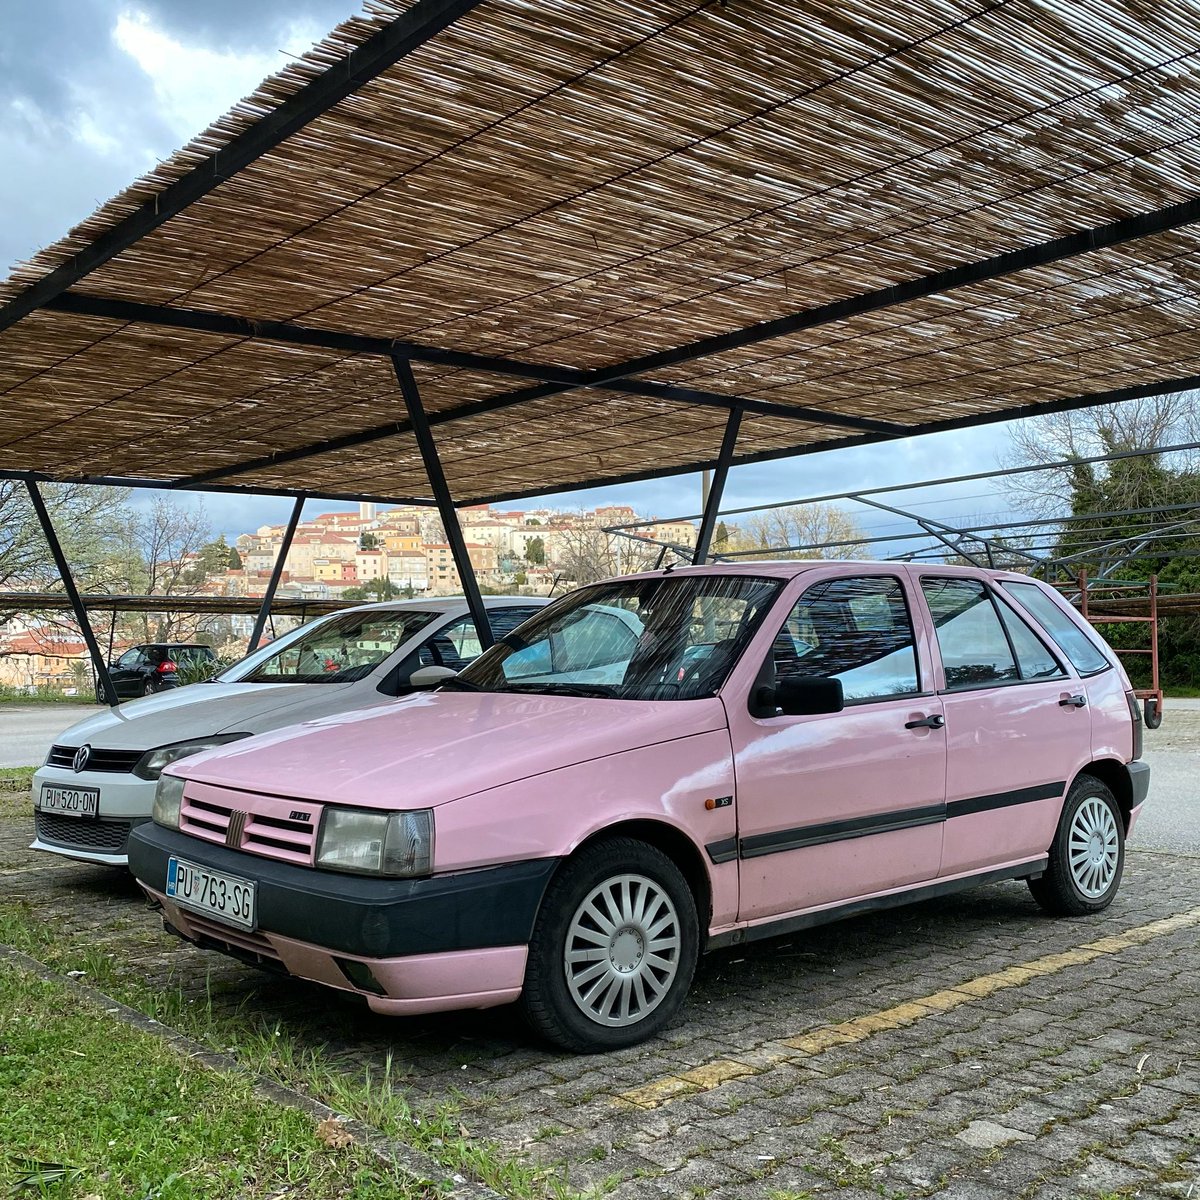 Think pink

Fiat Tipo (Type 160 pre-facelift, 1988-93) spotted in Vrsar/Croatia.
#Fiat #FiatTipo #FiatFriday #ThinkPINK 
@GeorgeCochrane1 @addict_car